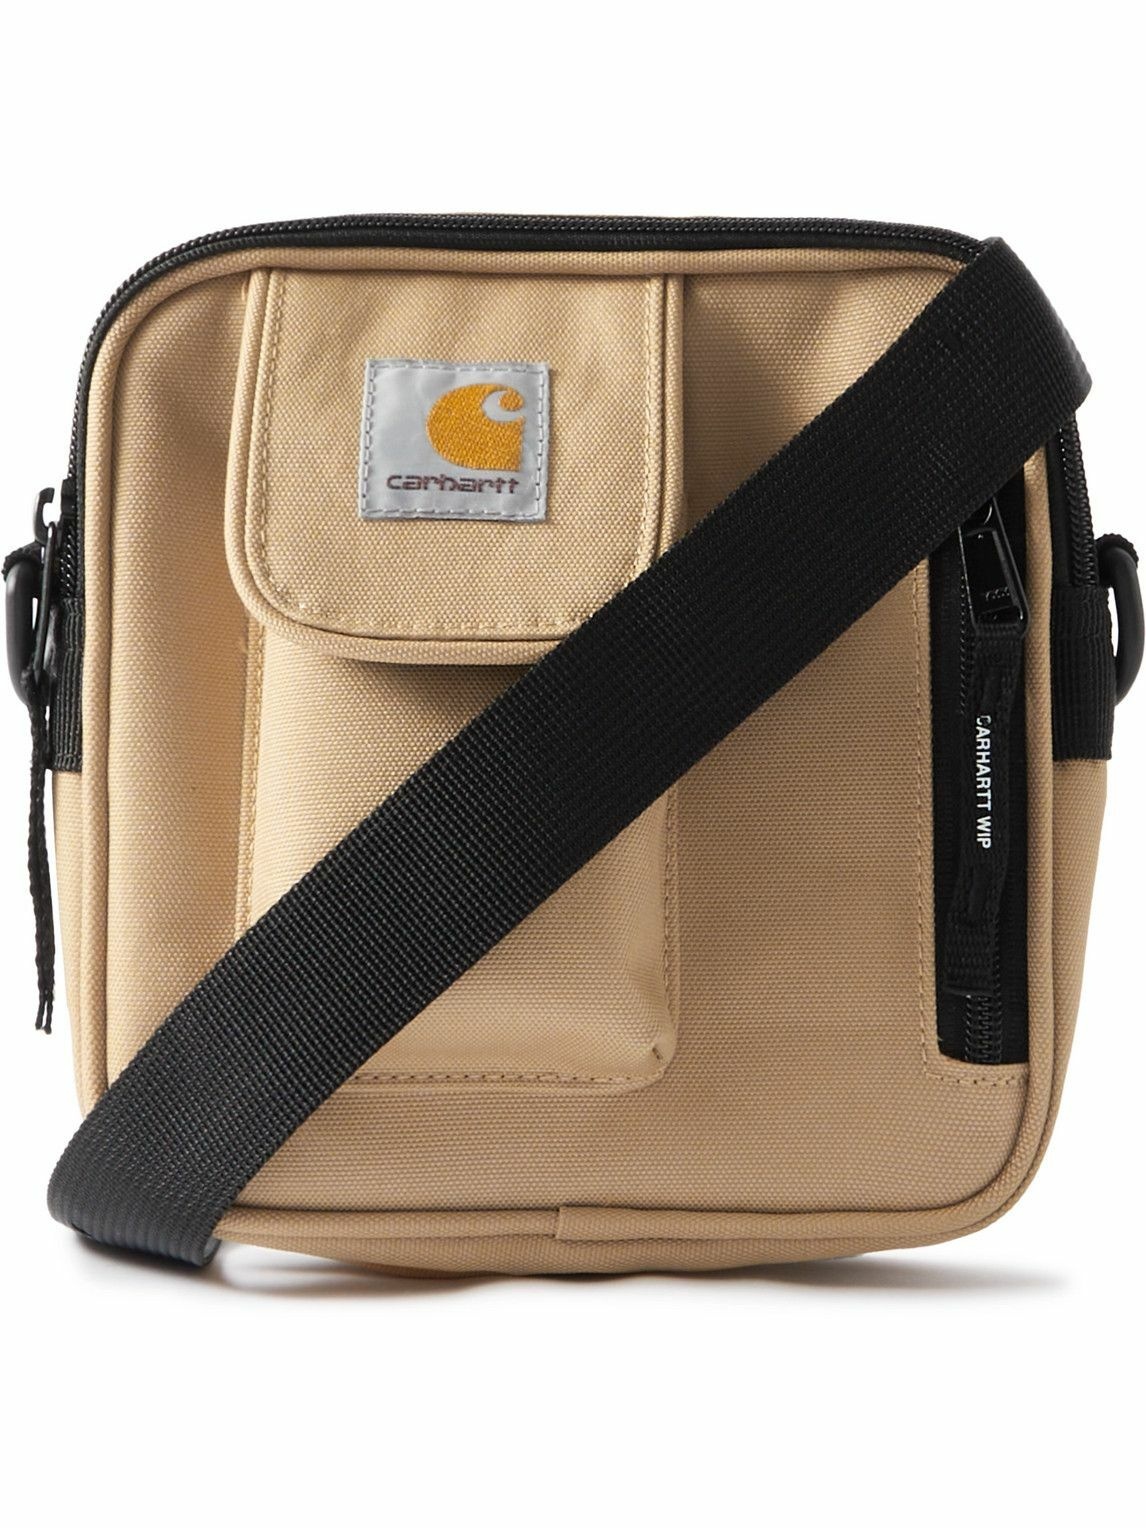 Carhartt Corduroy Shoulder Bag